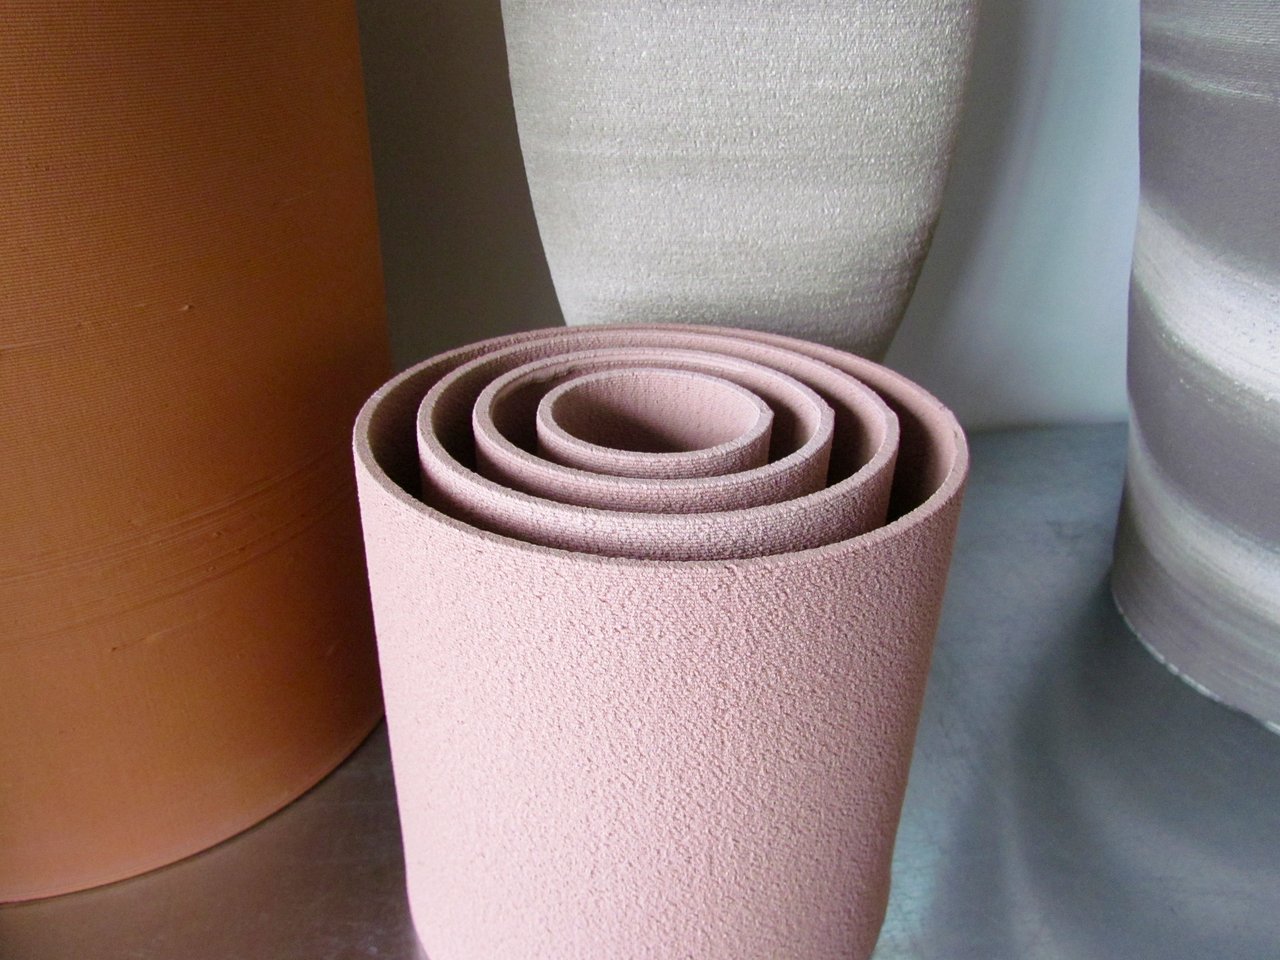  A selection of fine vases 3D printed in ceramics by Olivier van Herpt 